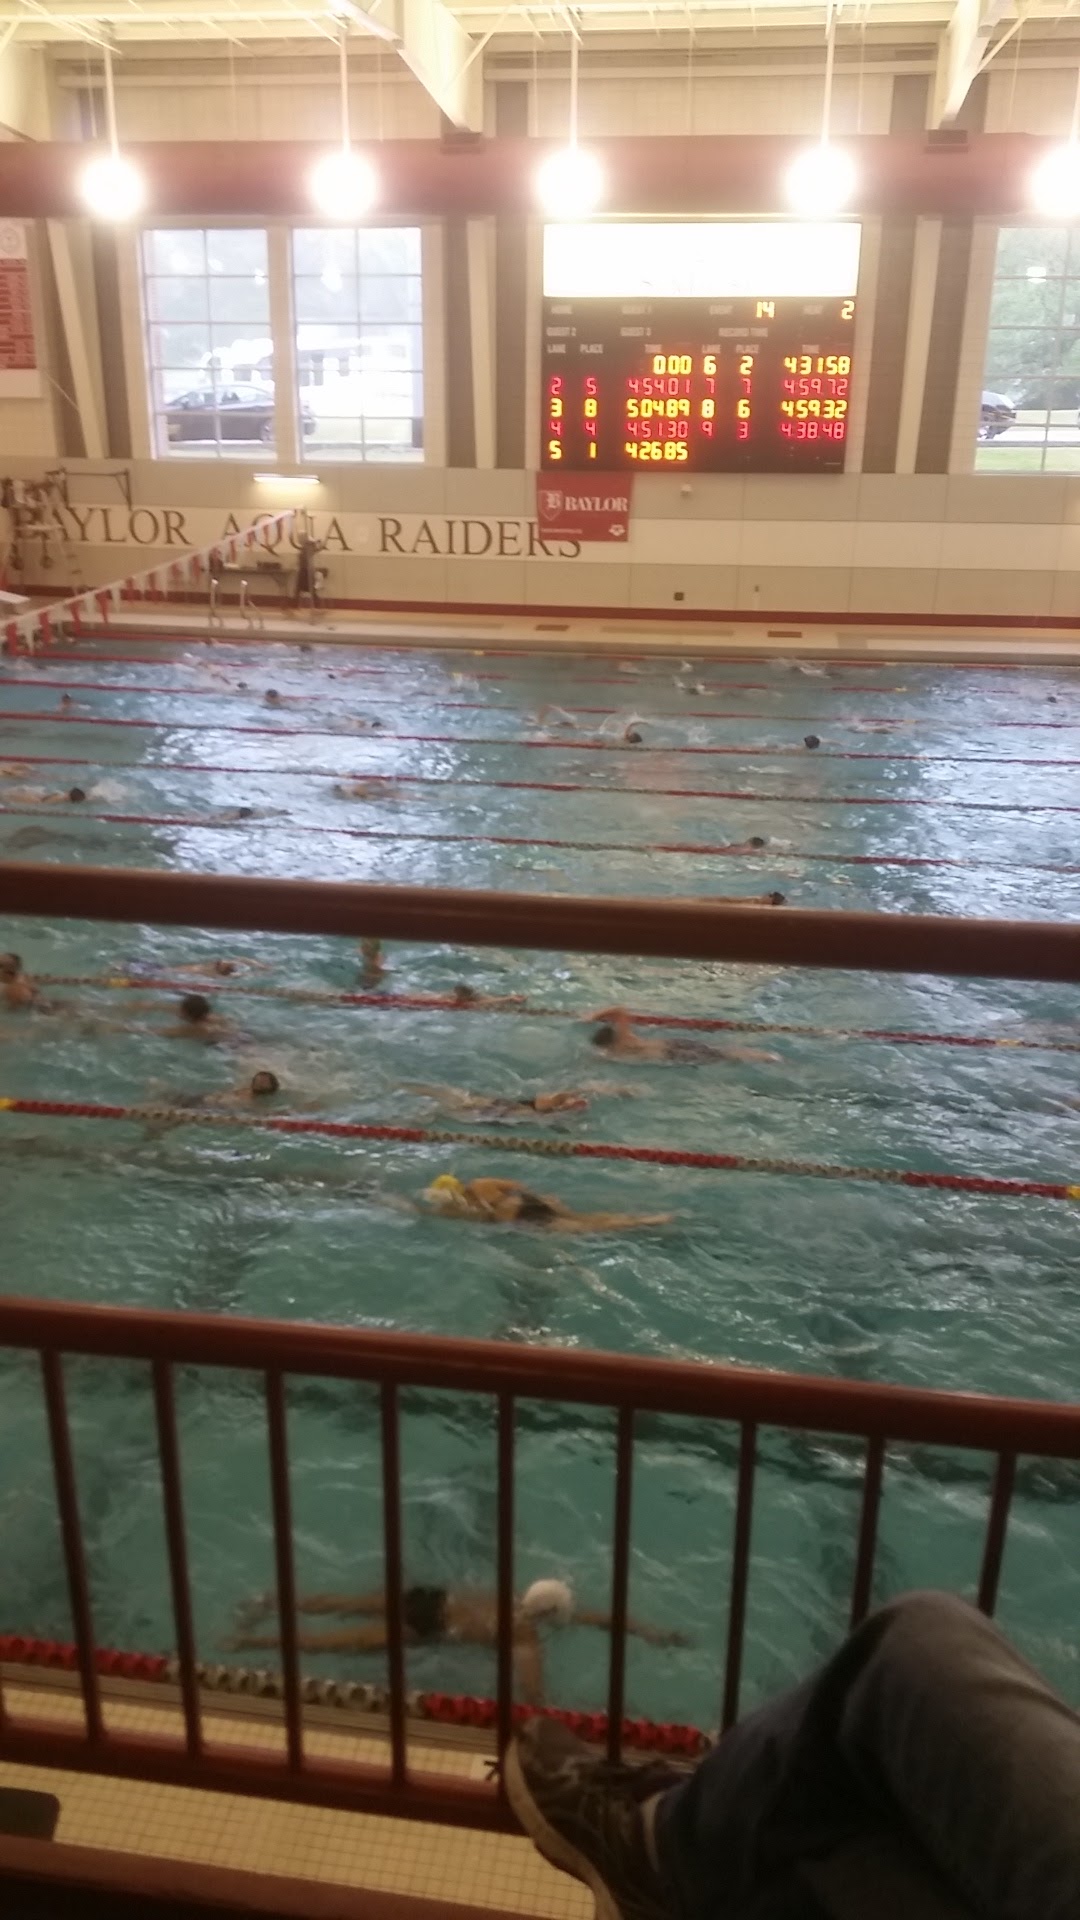 Baylor Swim Club